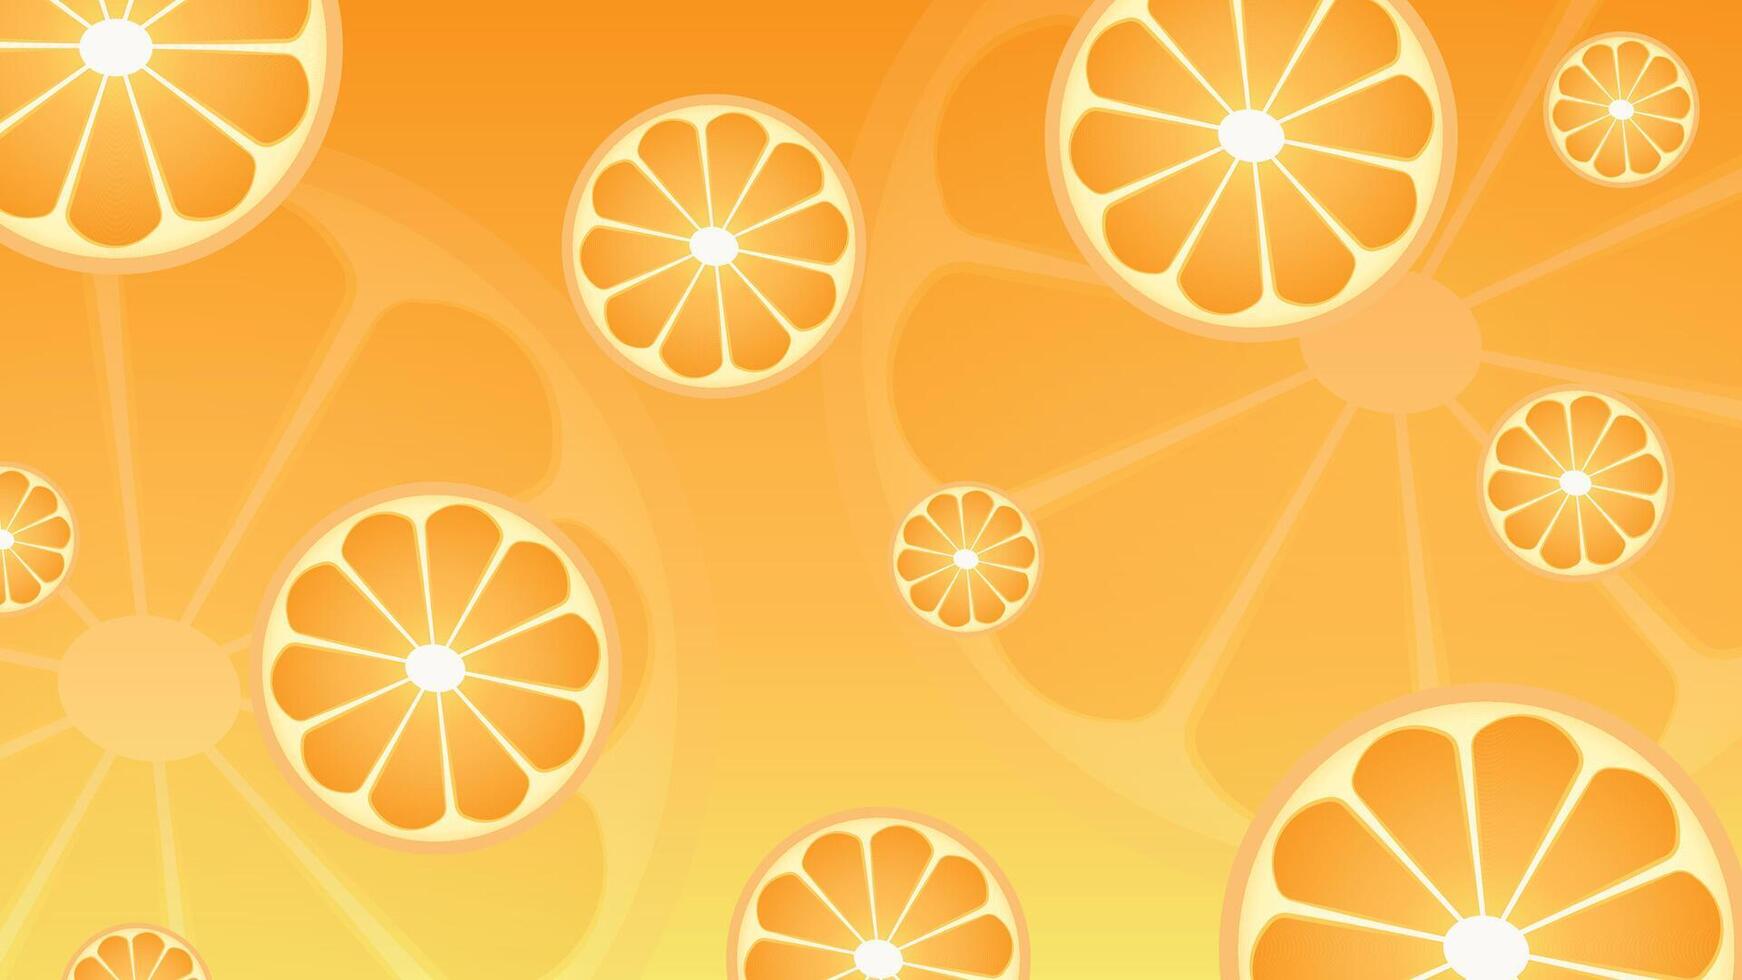 Floating background image of orange slices 01 vector